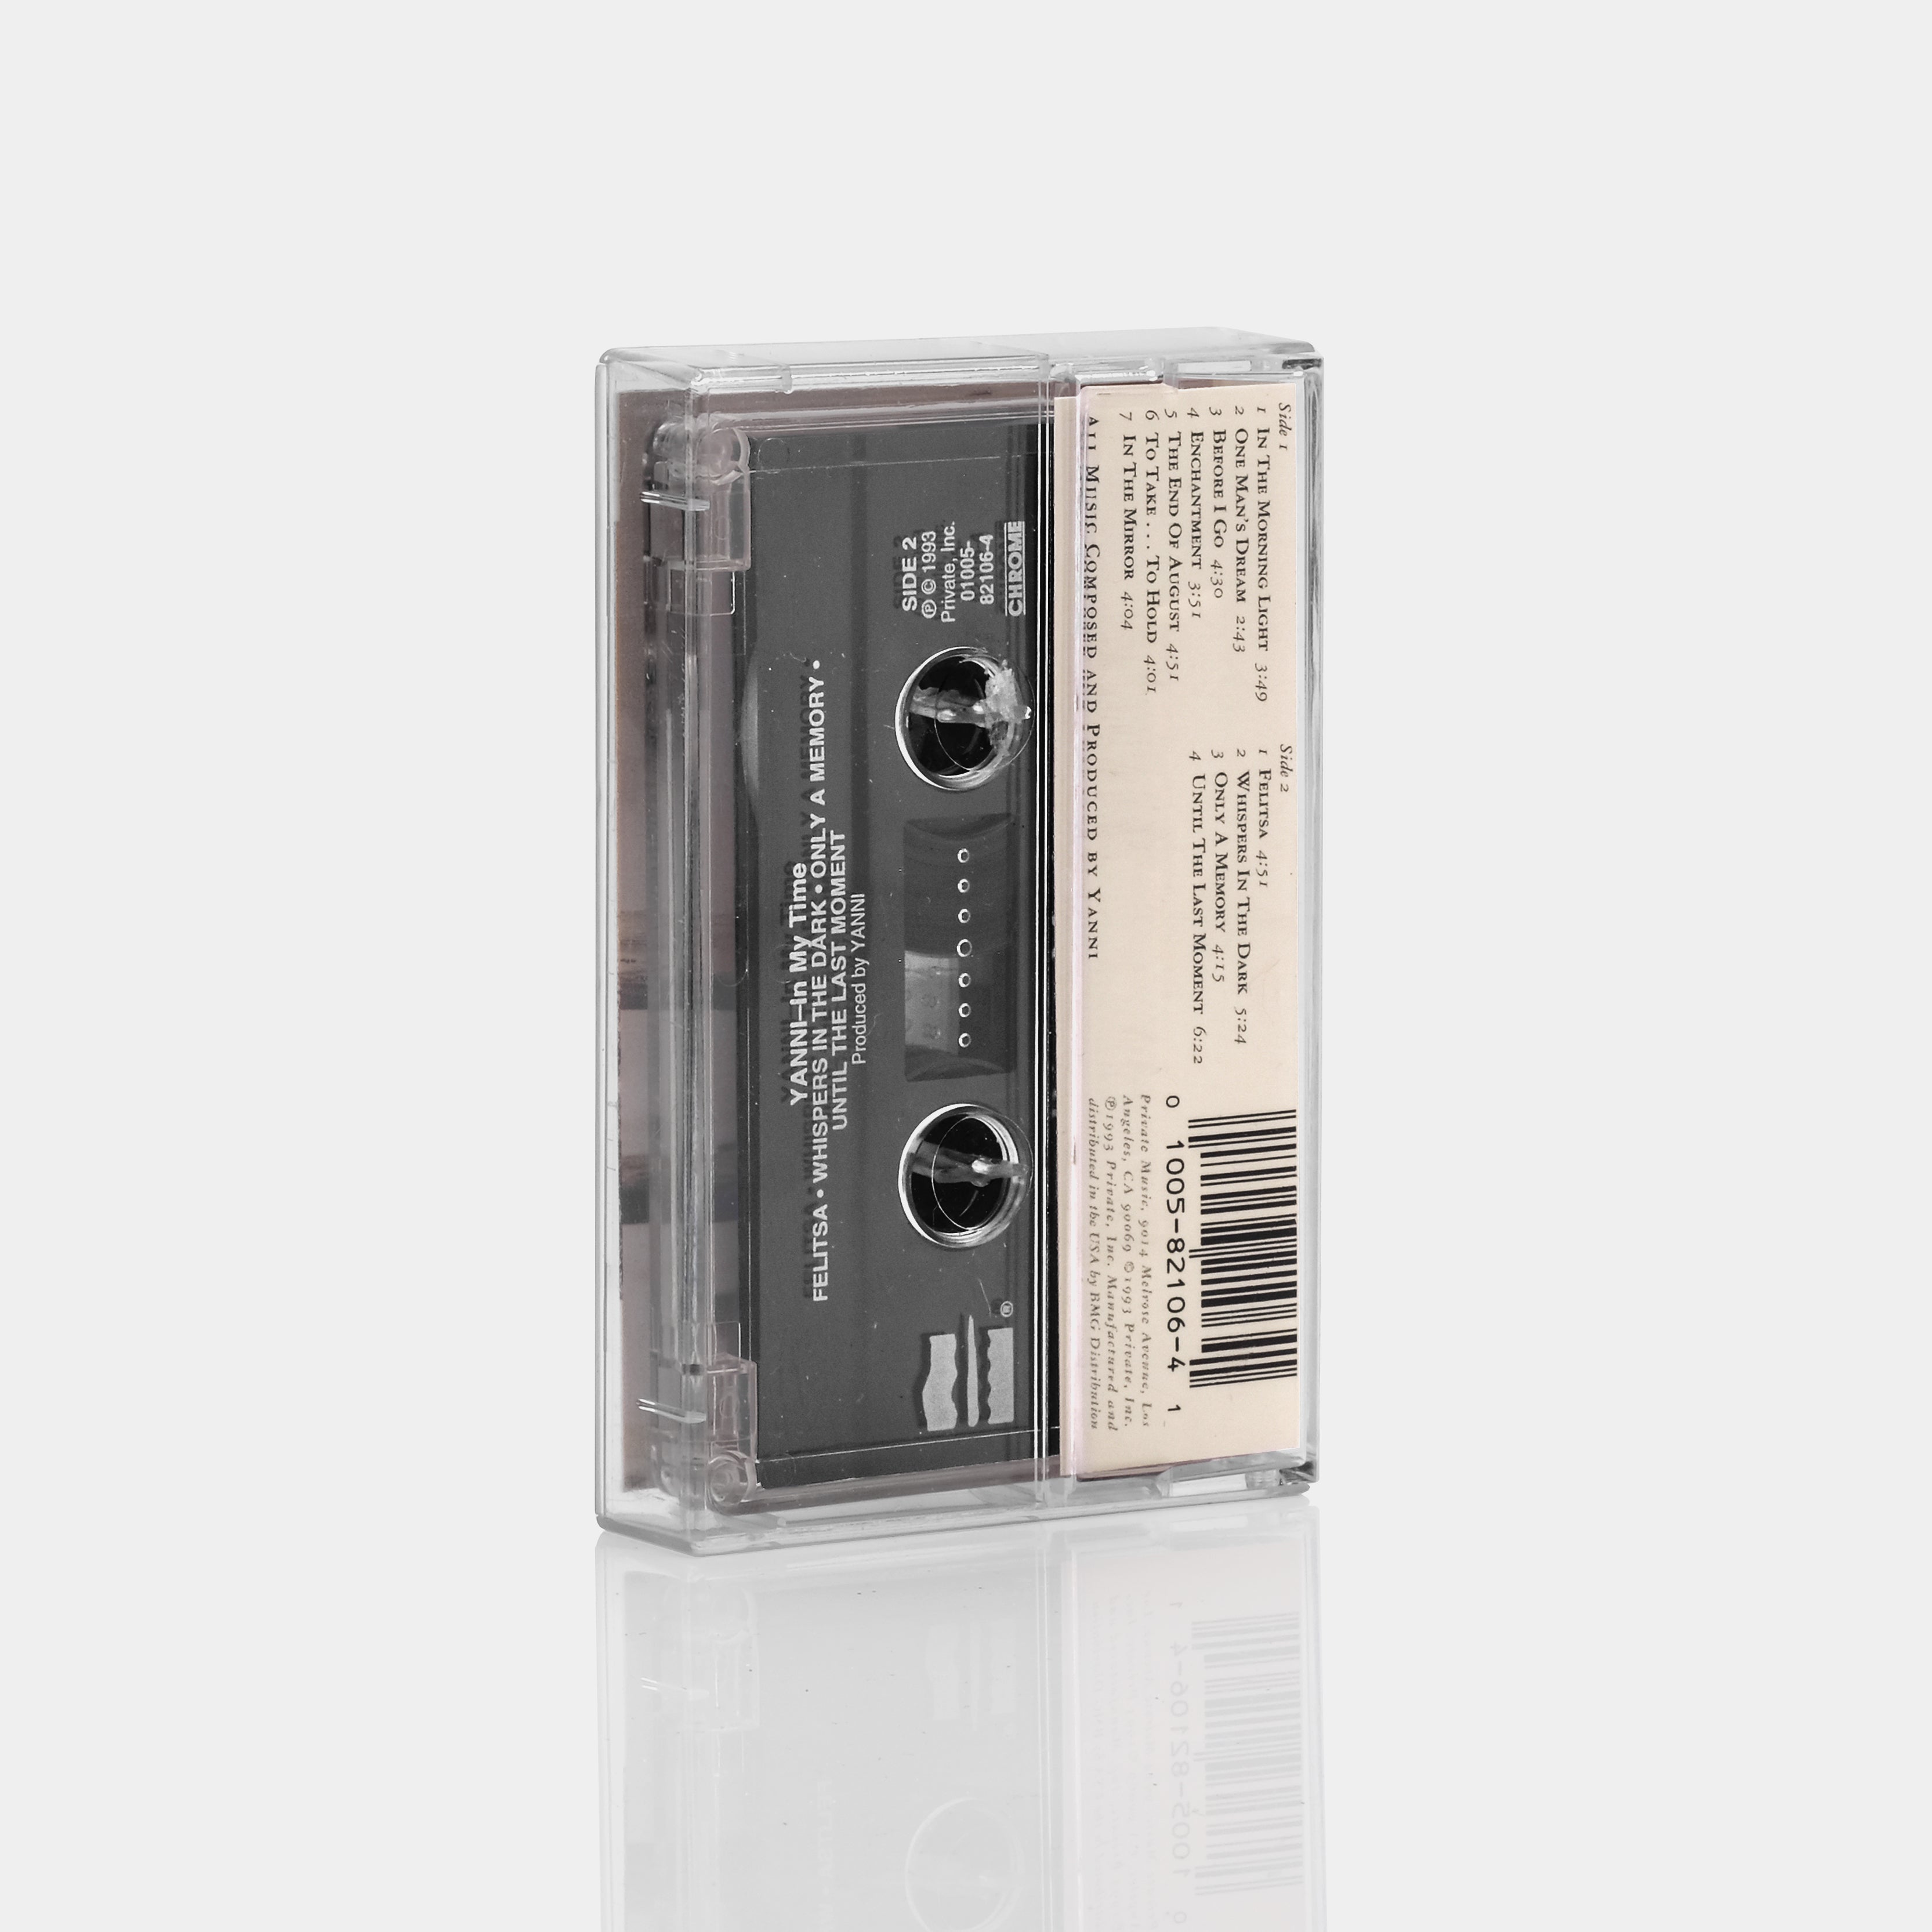 Yanni - In My Time Cassette Tape